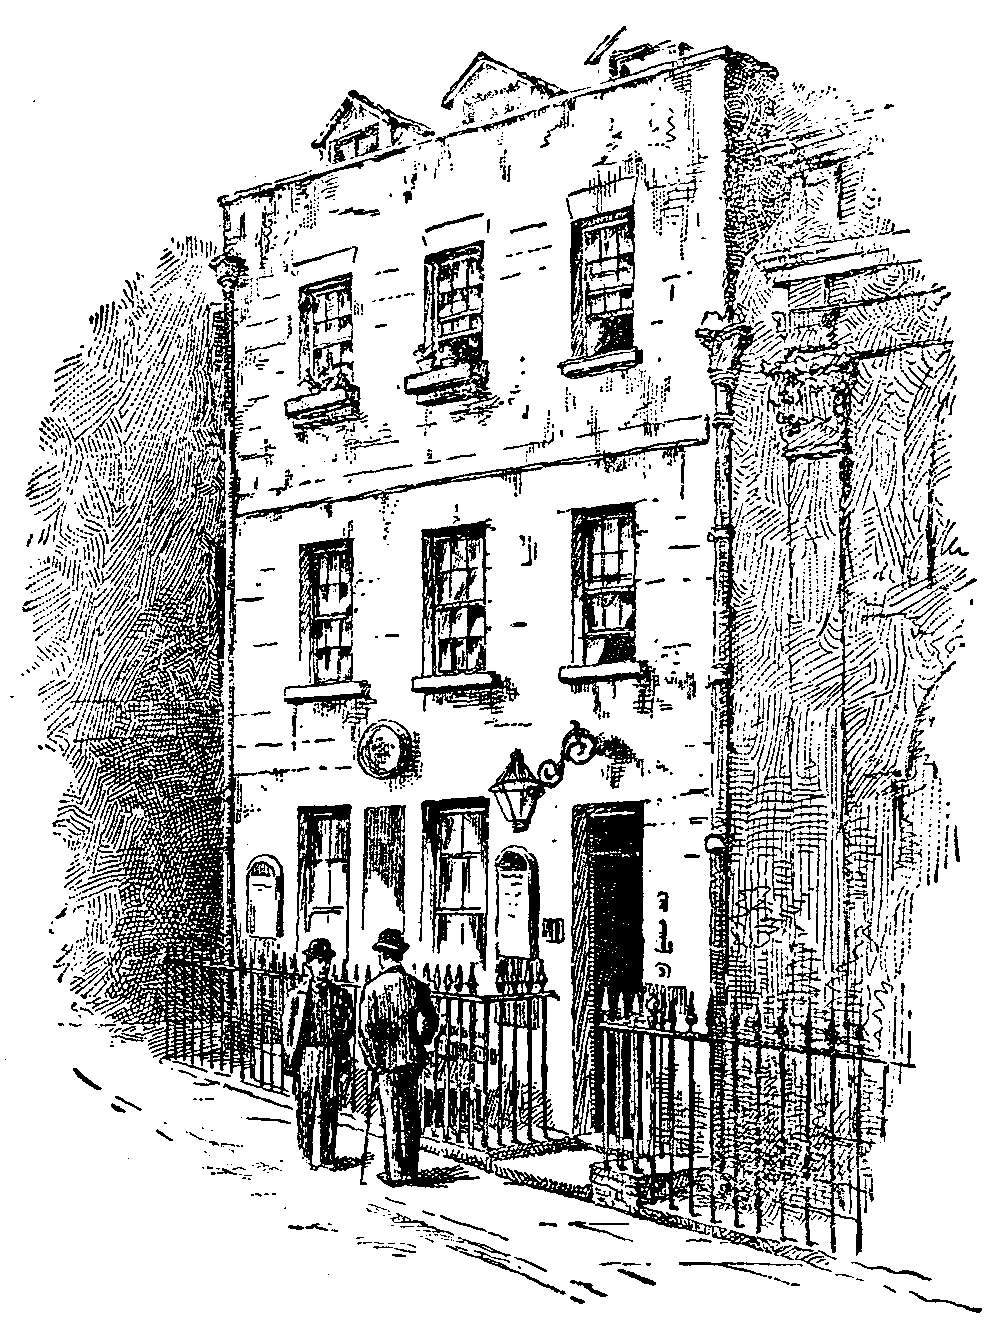 Newton's London house